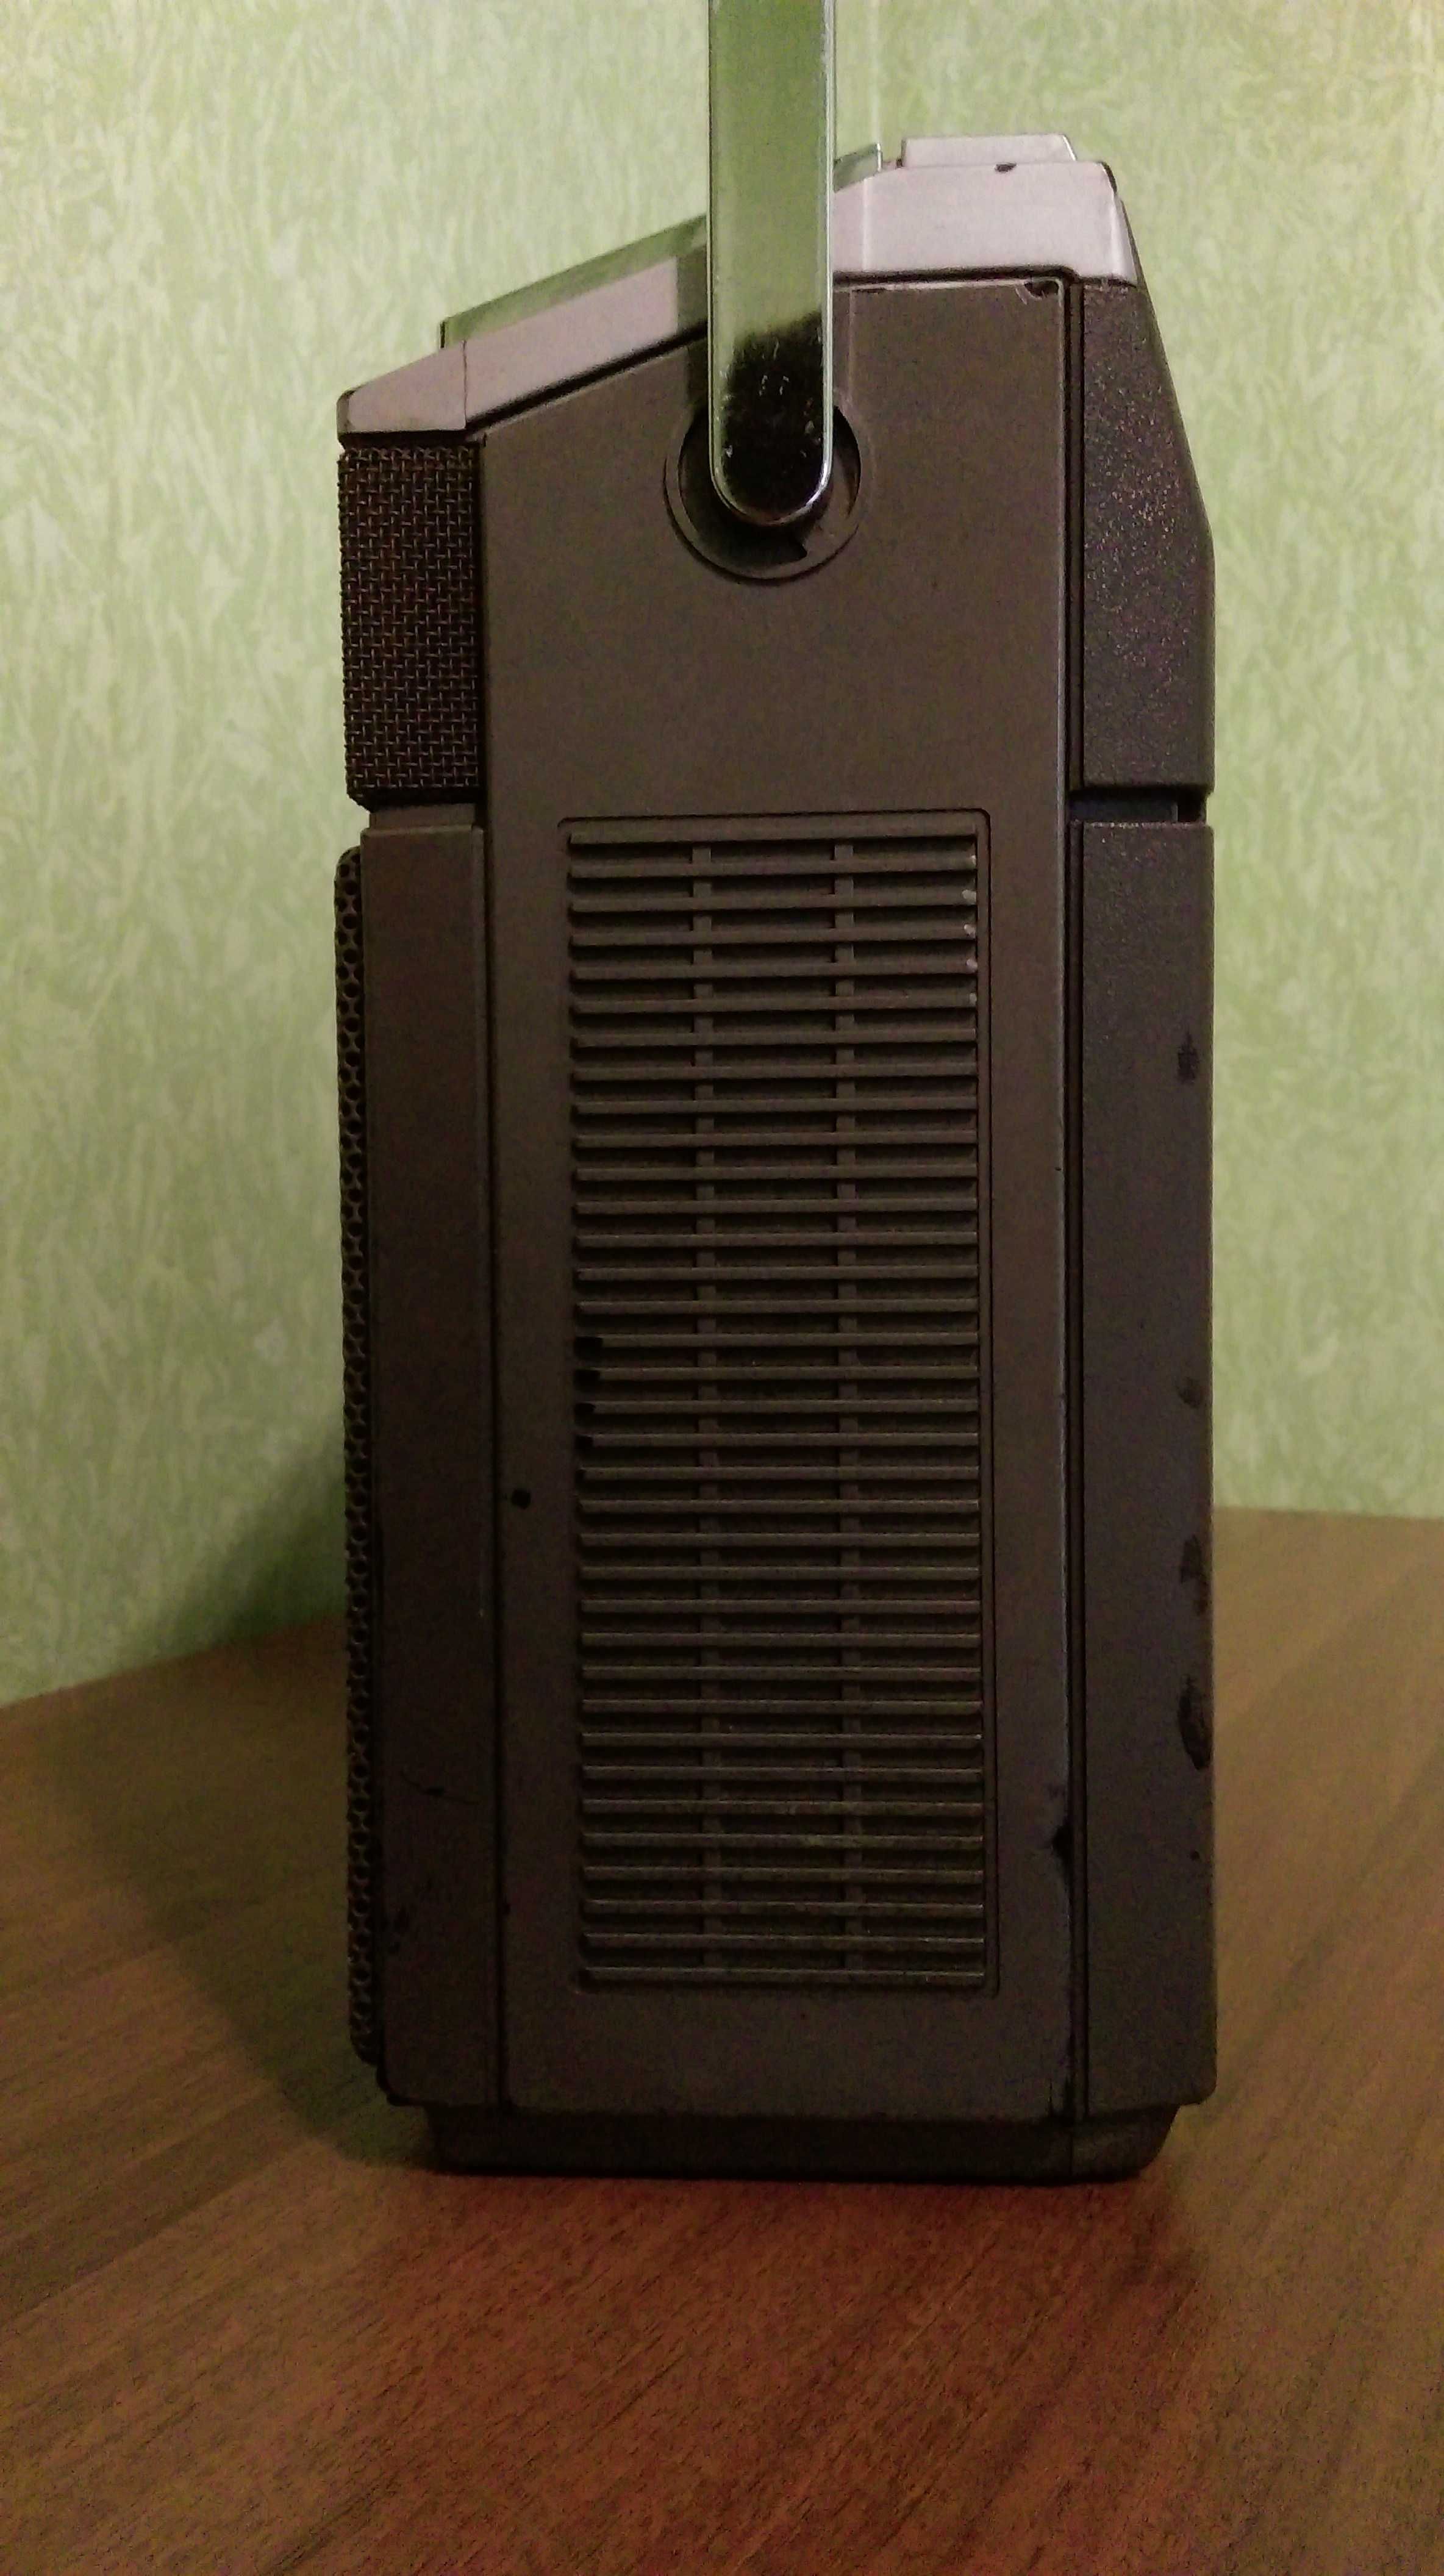 Hitachi TRK-8800E Made in Japan -1980 года выпуска (рабочая).